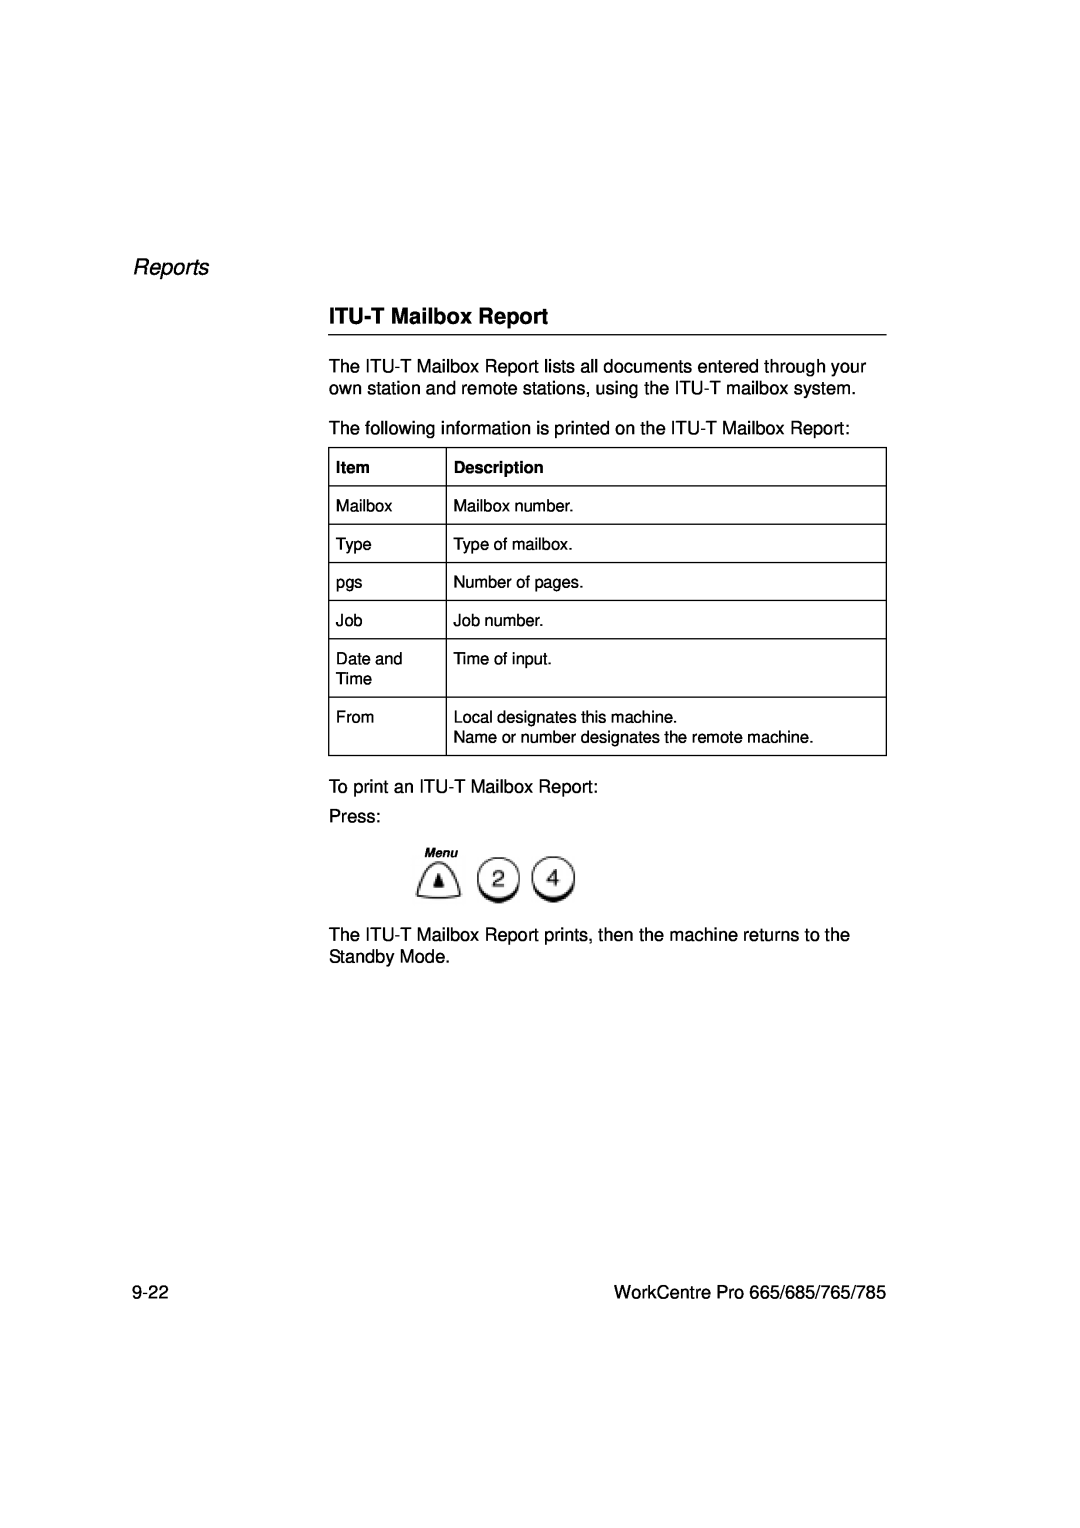 Xerox 765, 665, 685, 785 manual ITU-TMailbox Report, Reports 